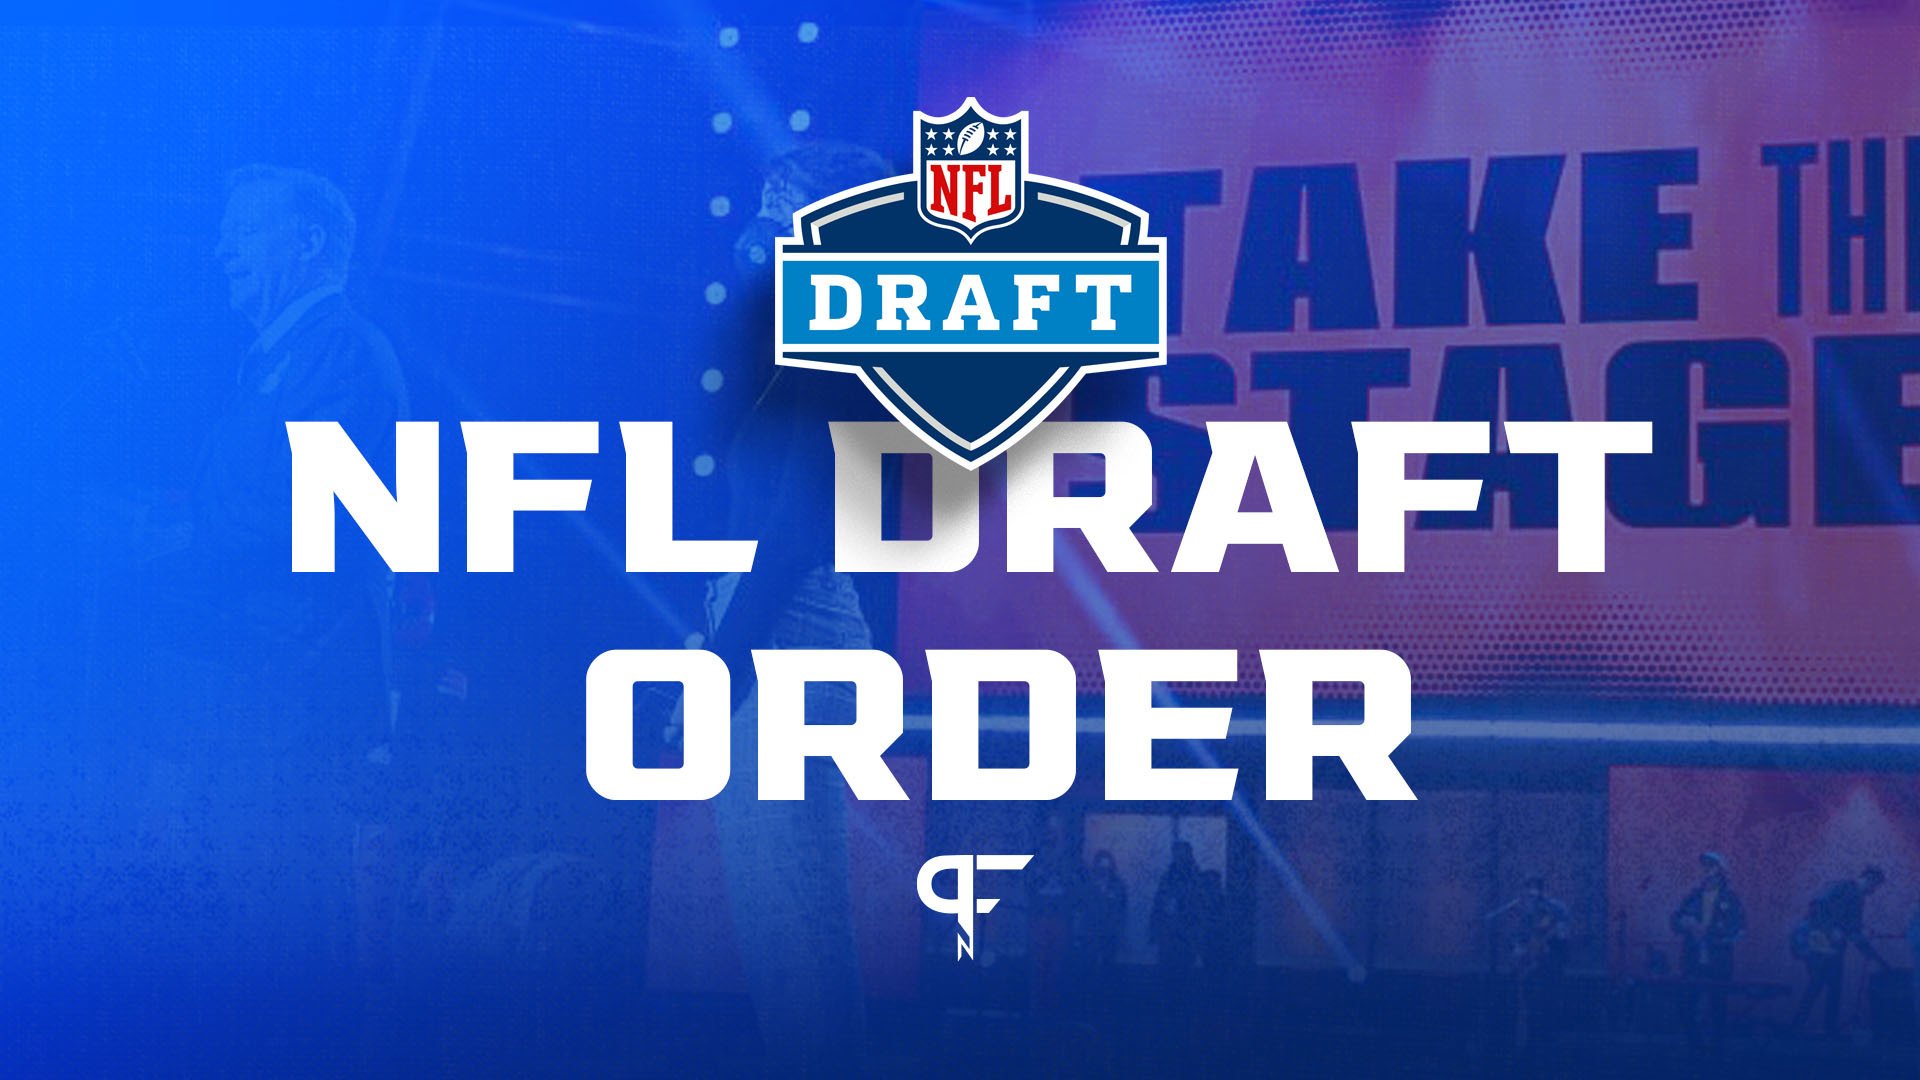 2nd round draft order